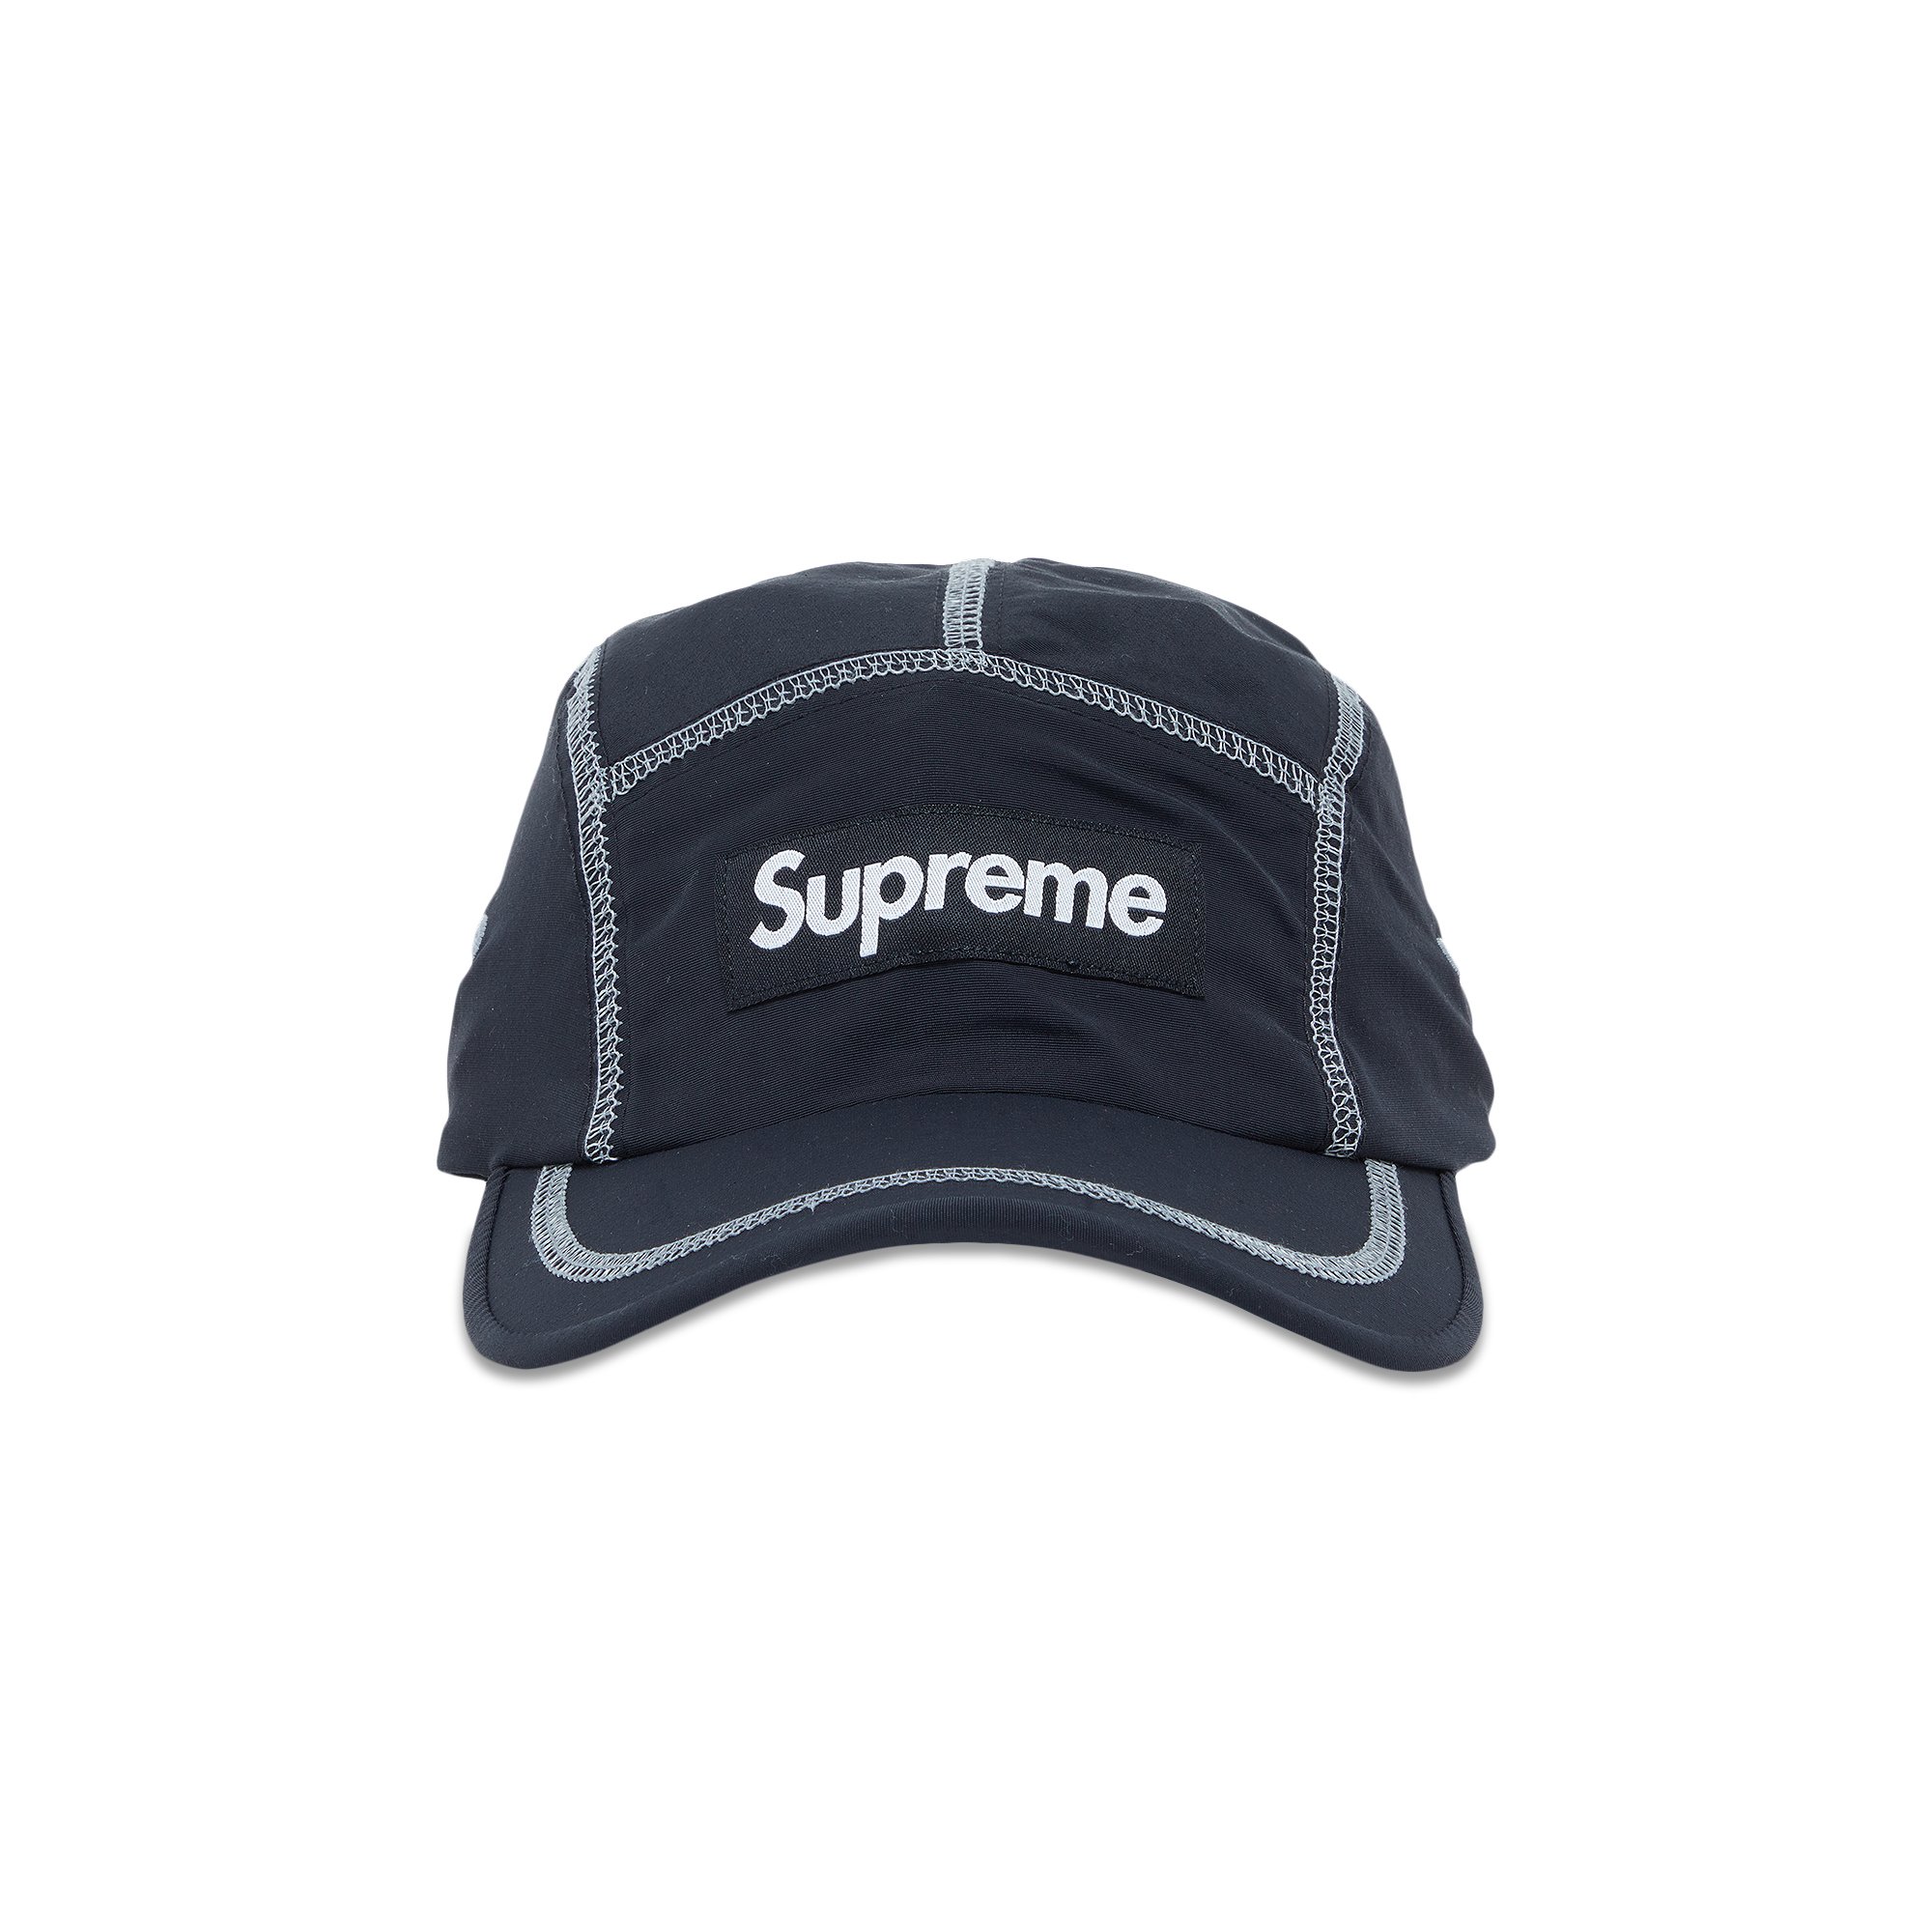 supreme nylon stitch jet cap